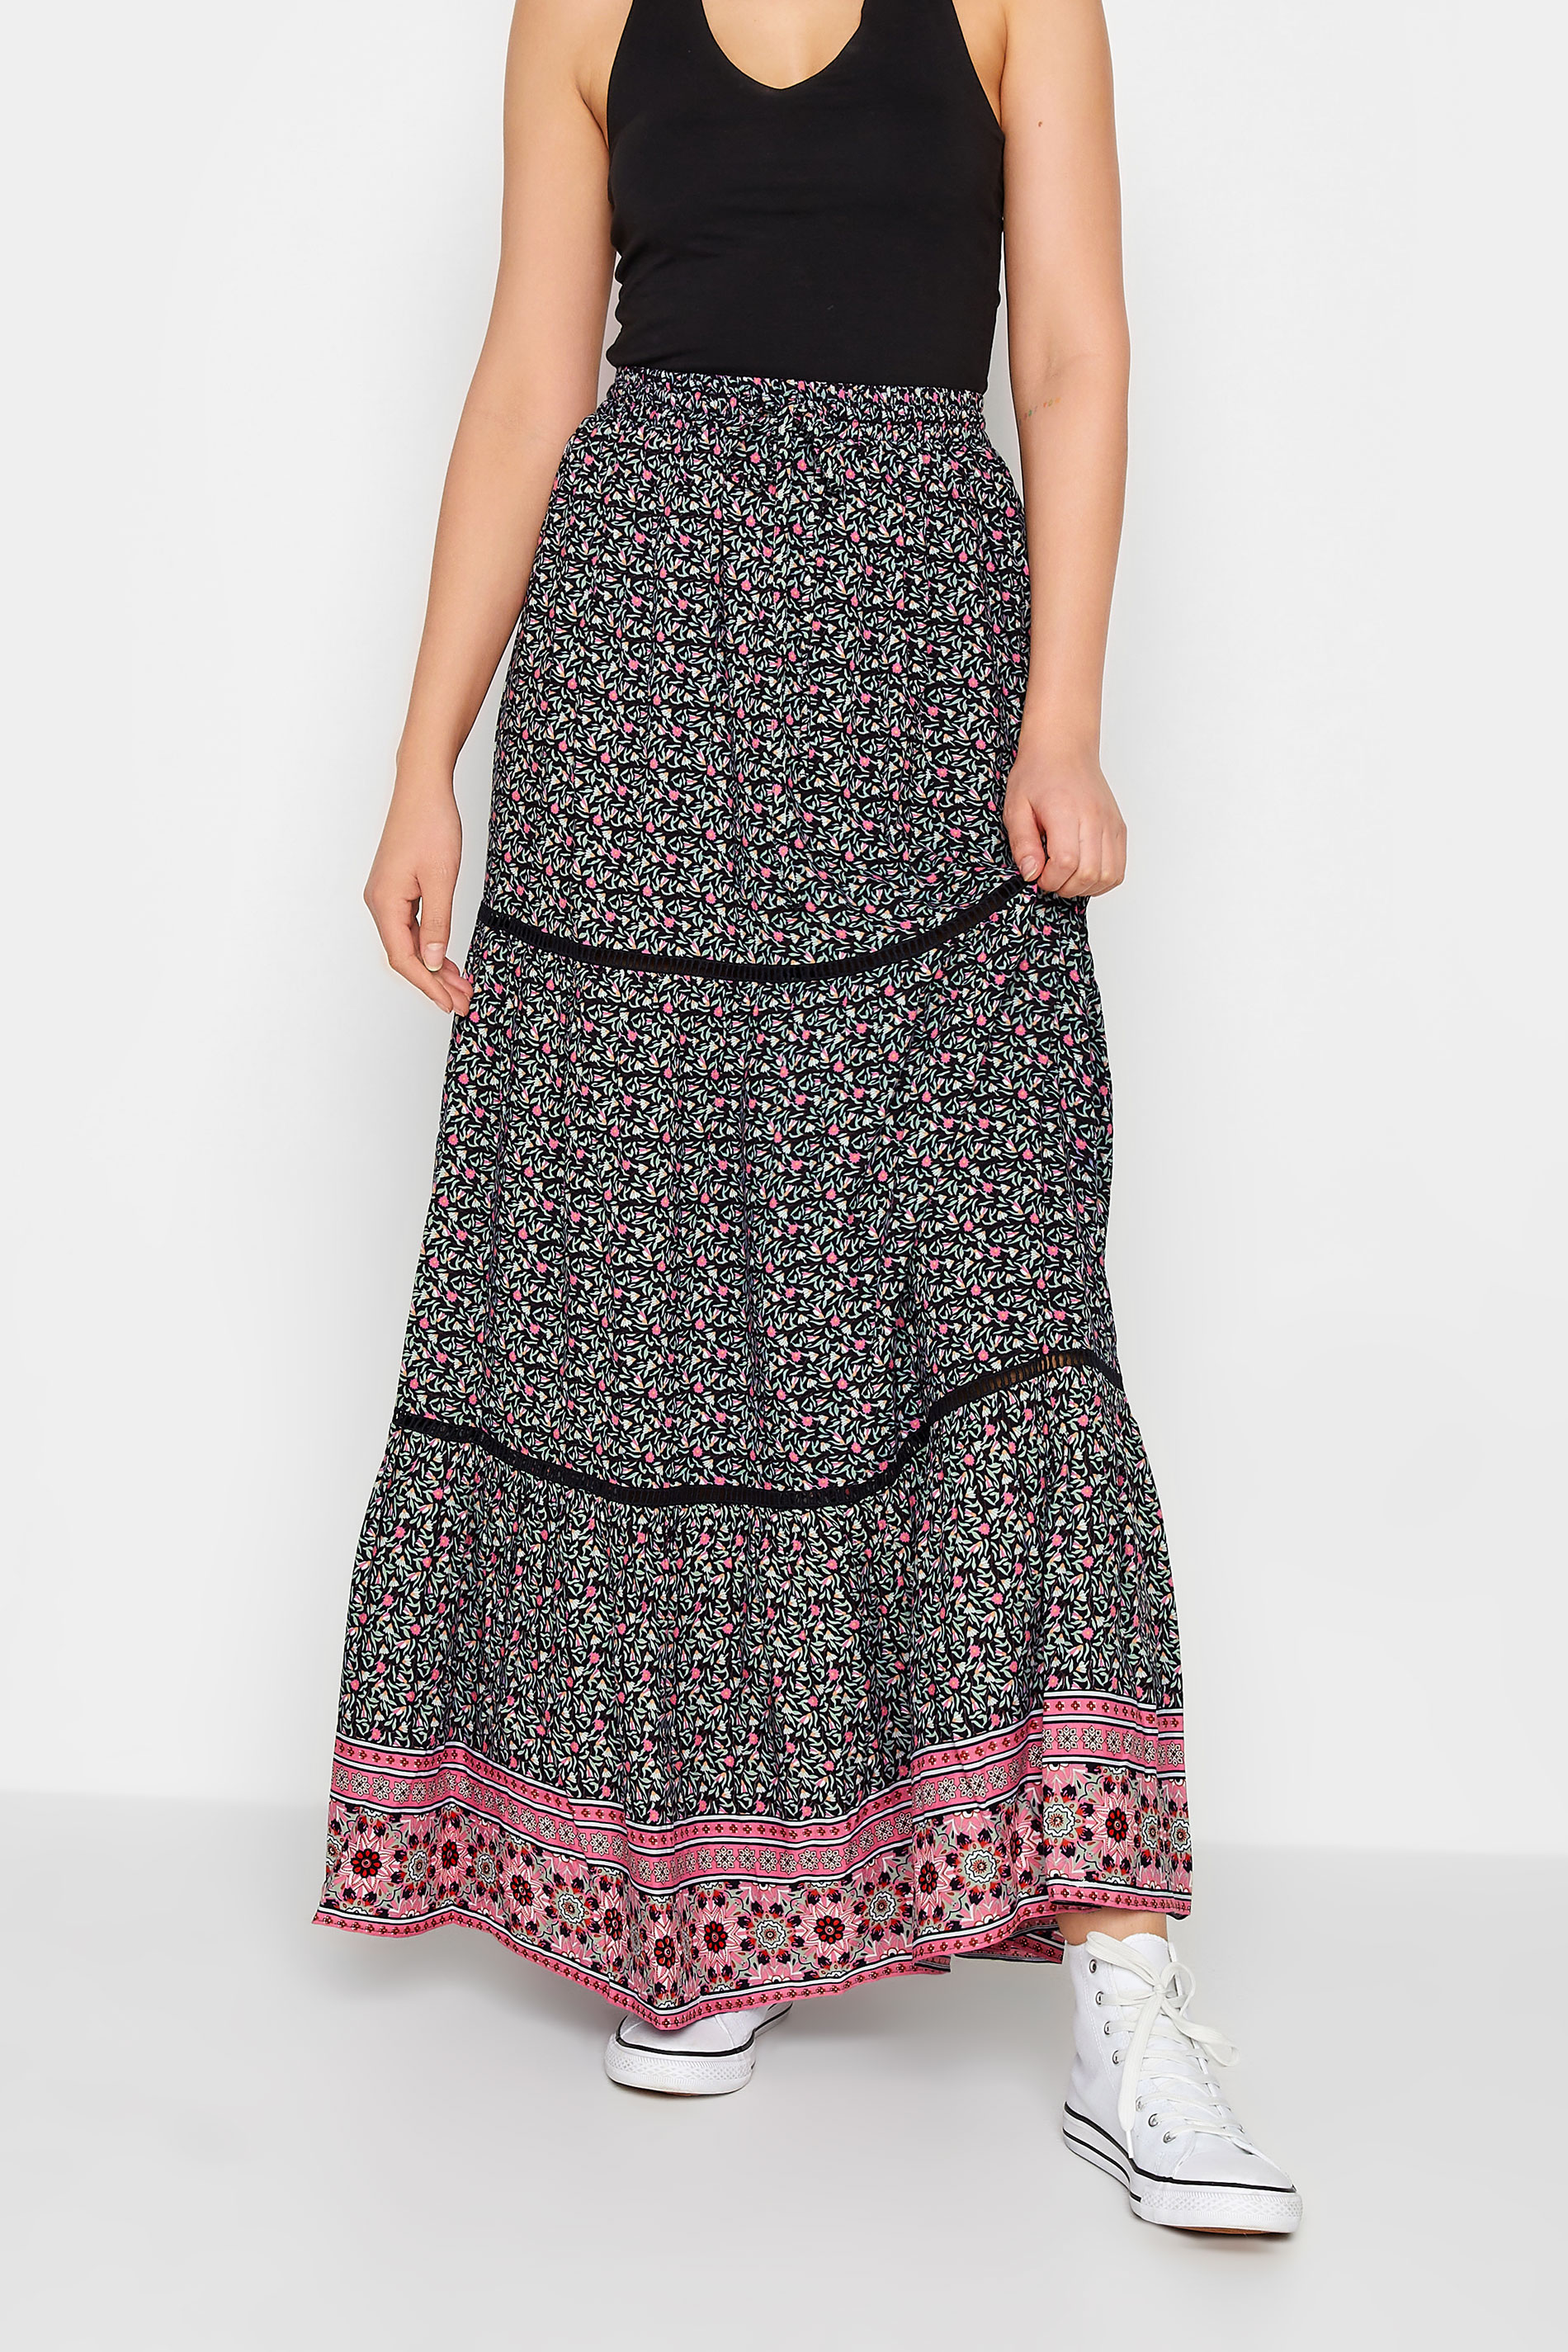 LTS Tall Women's Black Ditsy Floral Print Maxi Skirt | Long Tall Sally 1